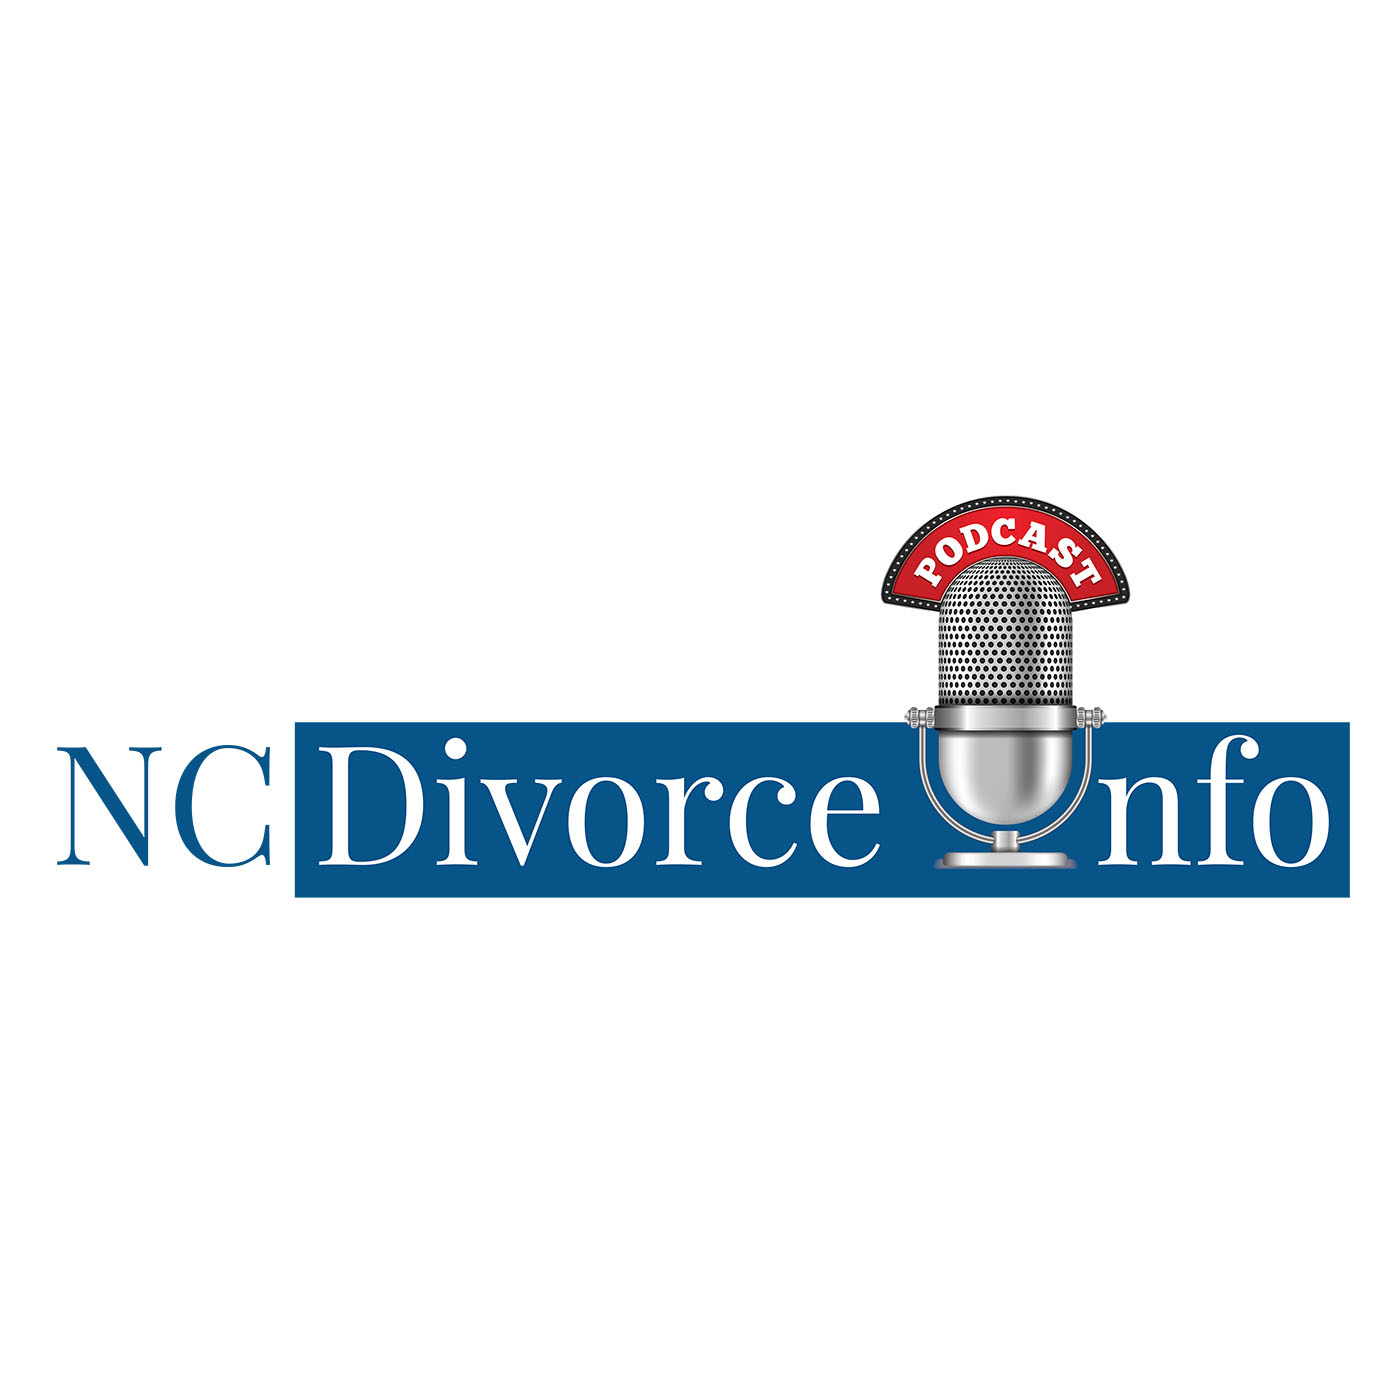 The NC Divorce Info Podcast